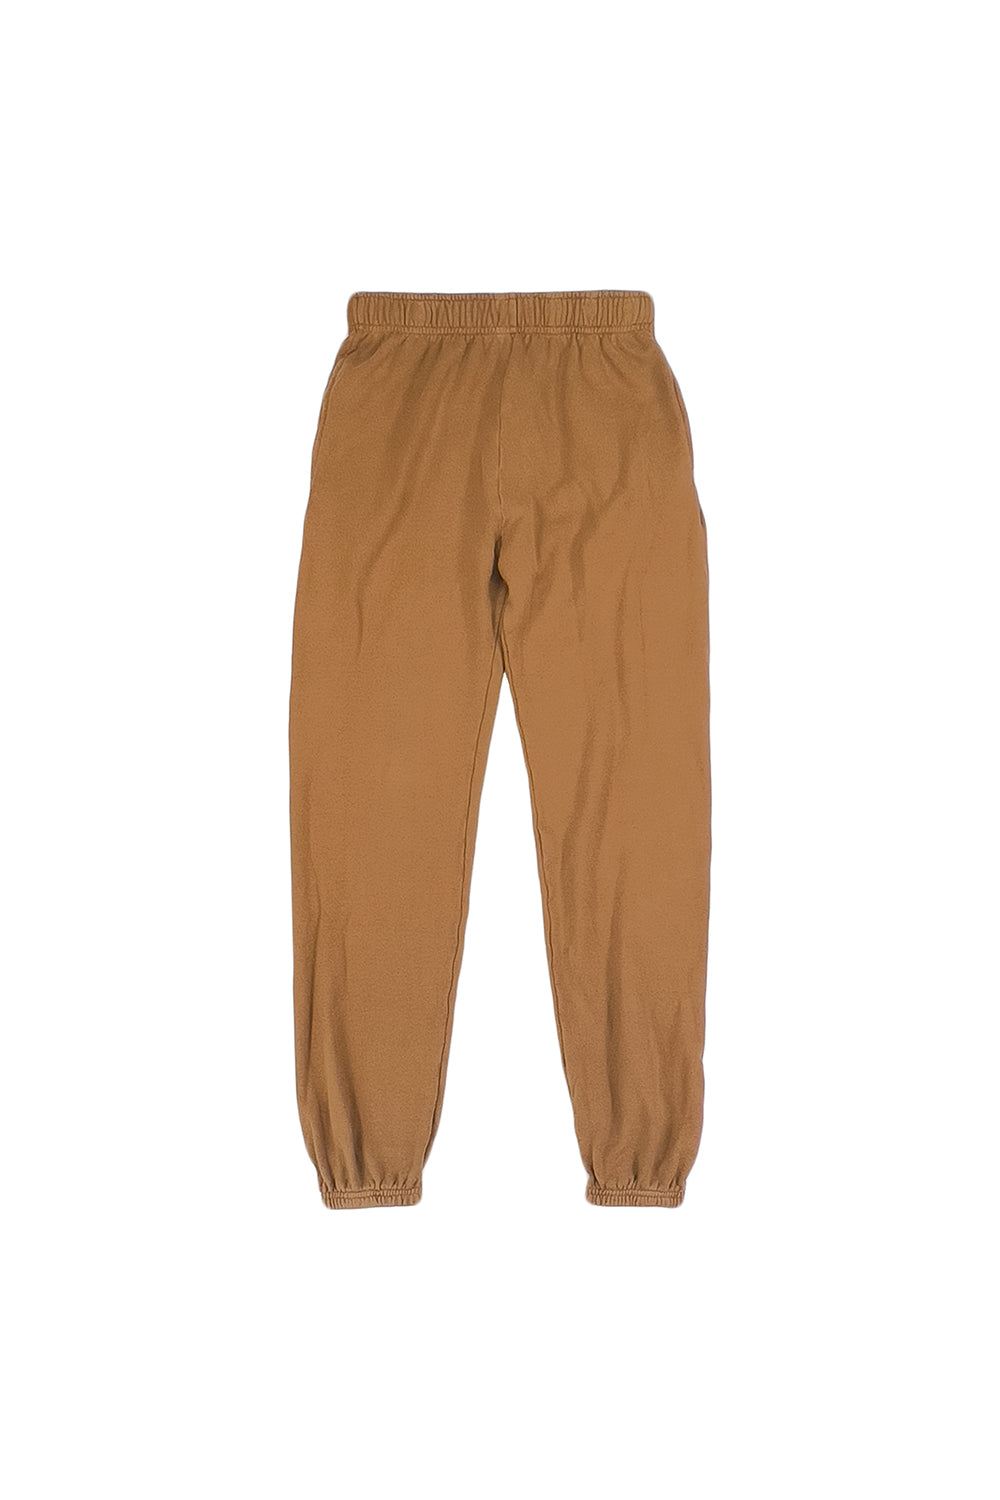 Classic Sweatpant | Jungmaven Hemp Clothing & Accessories / Color: Copper